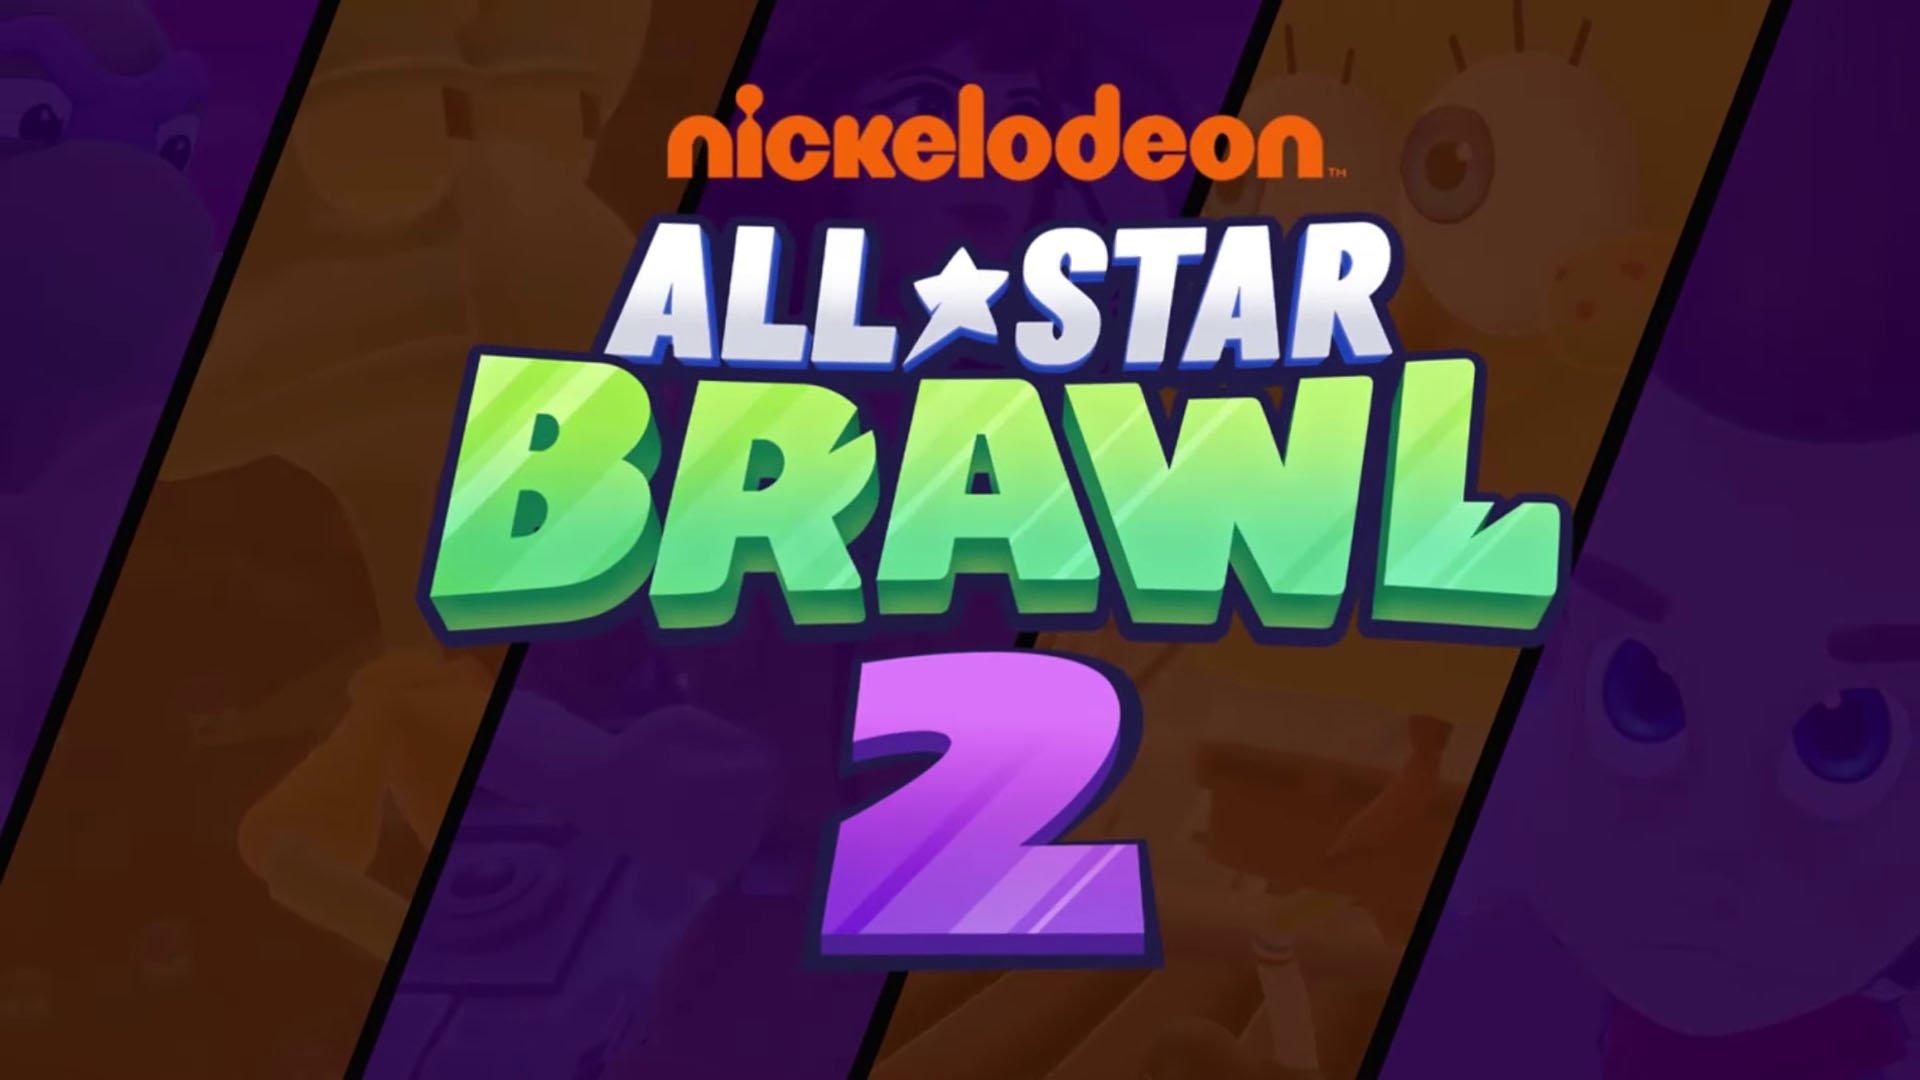 Nickelodeon All-Star Brawl - Wikipedia